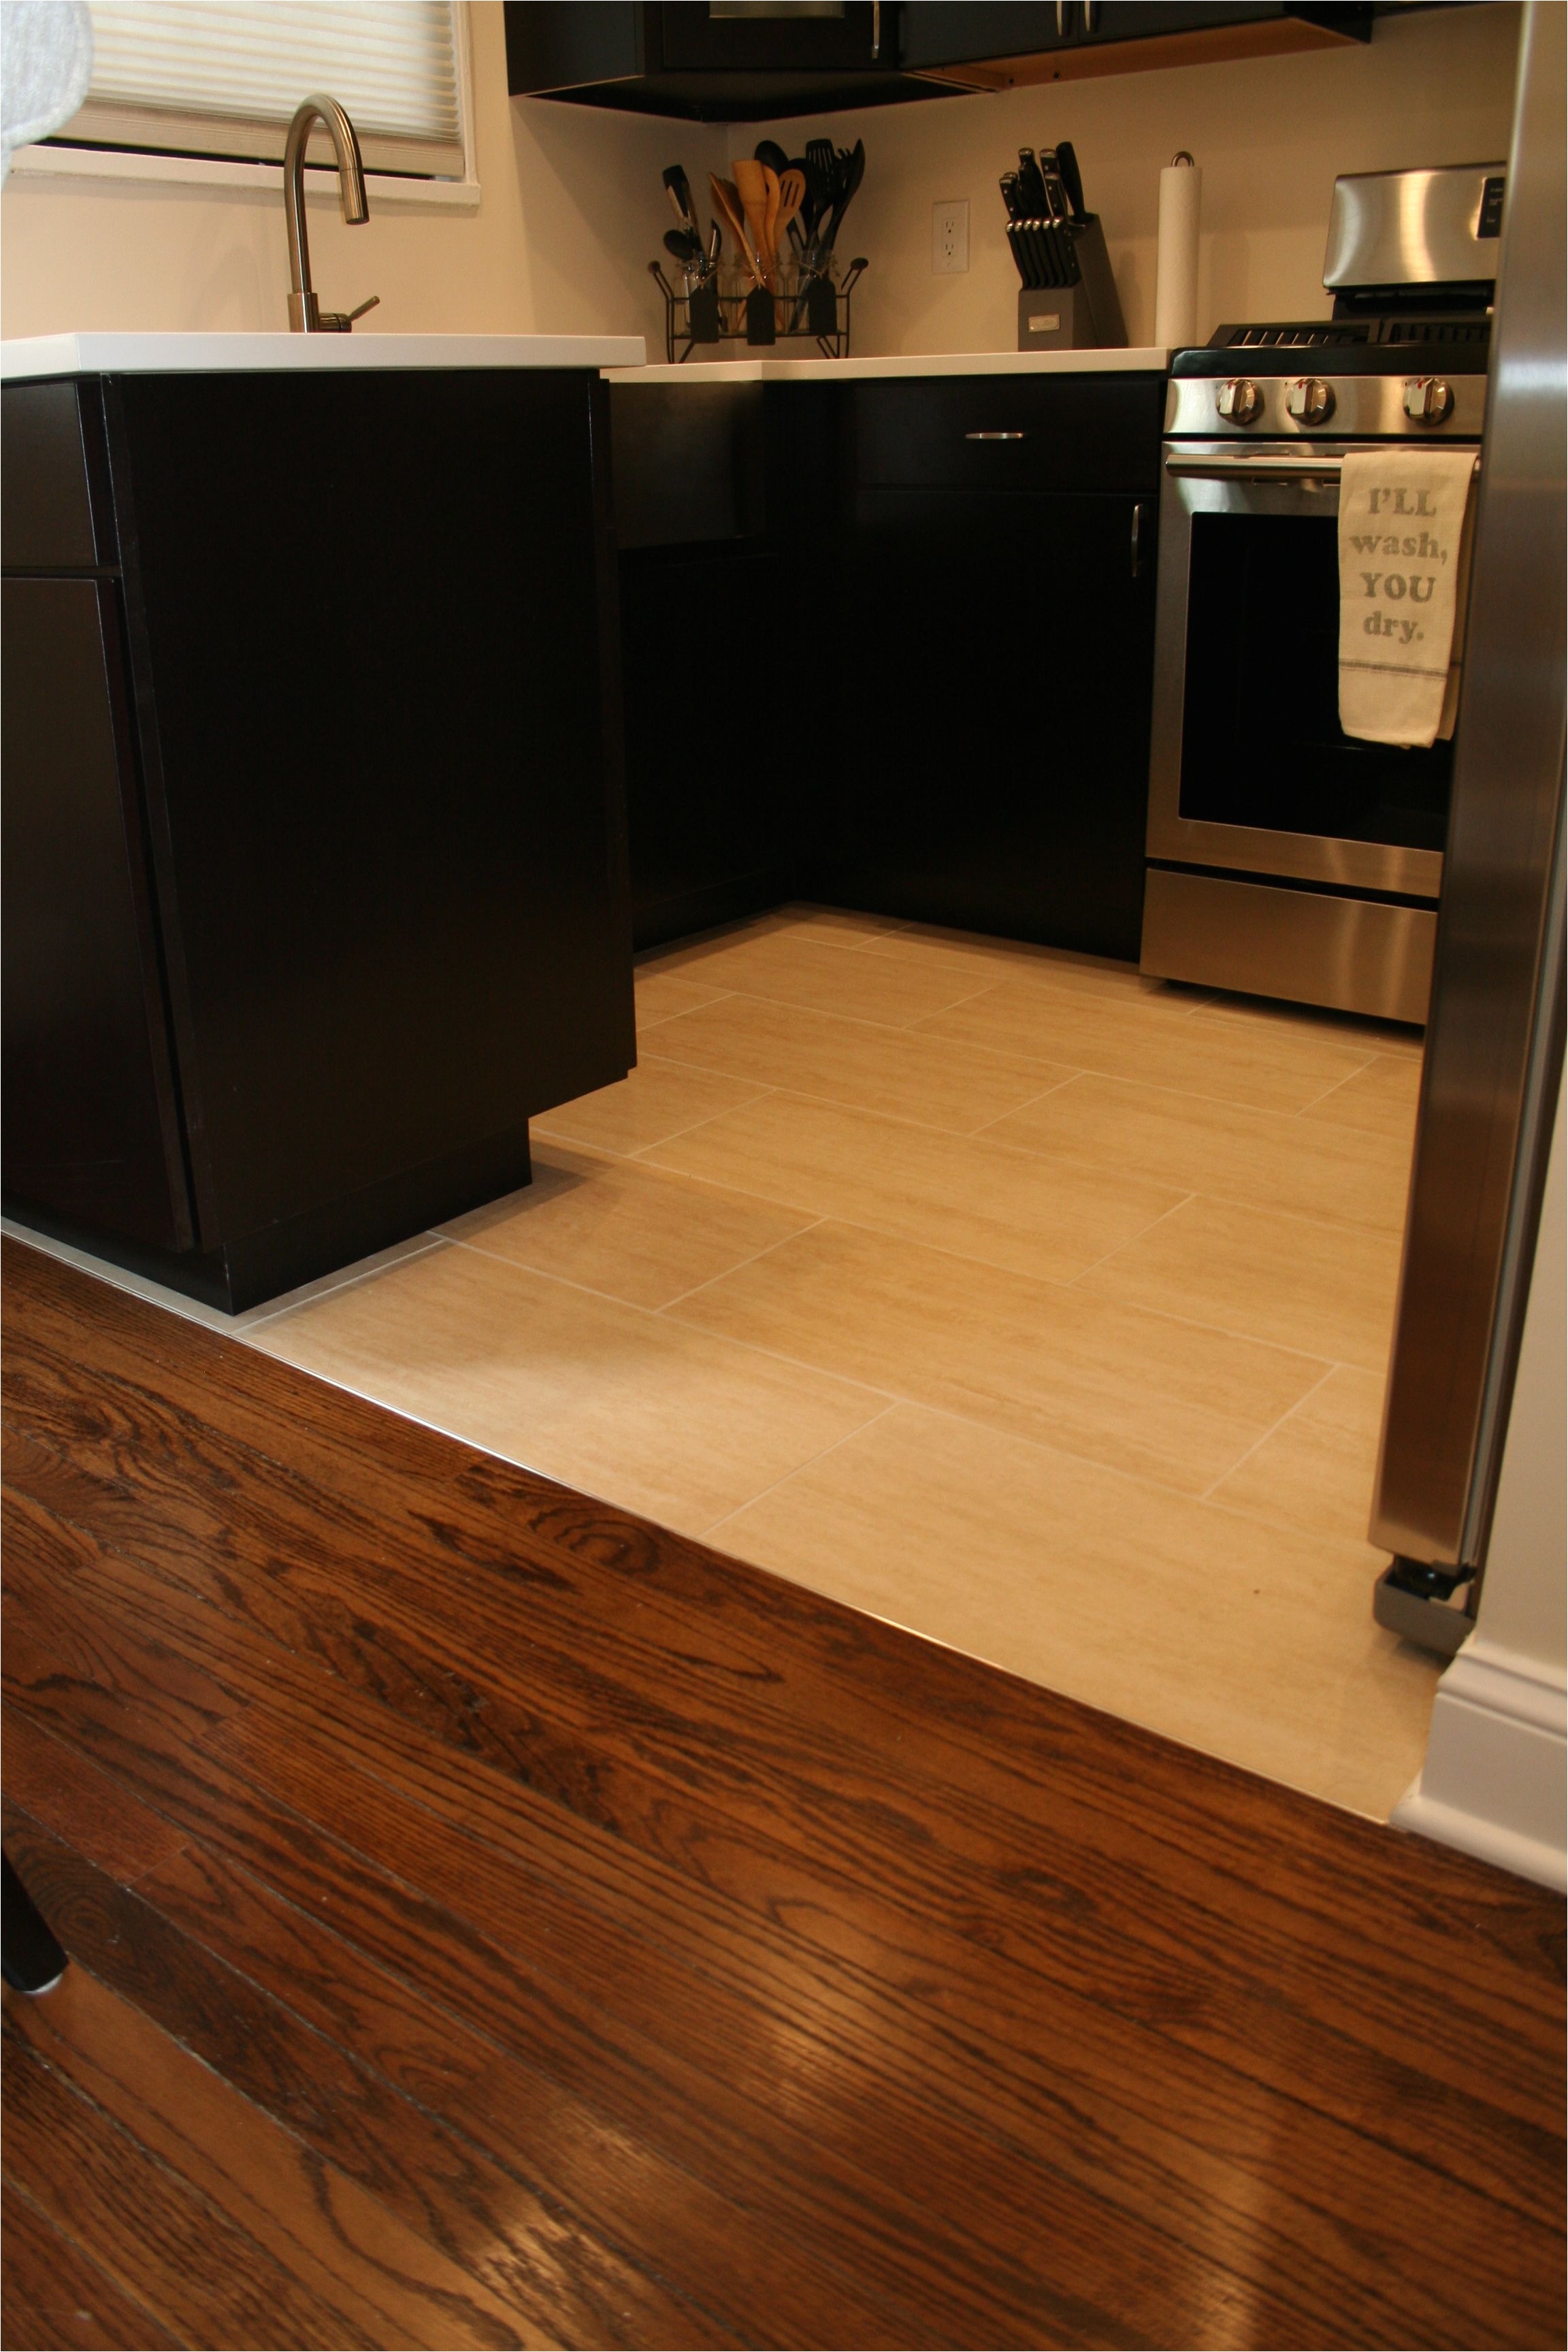 Hardwood Floor Installation atlanta Transition From Tile to Wood Floors Light to Dark Flooring Http